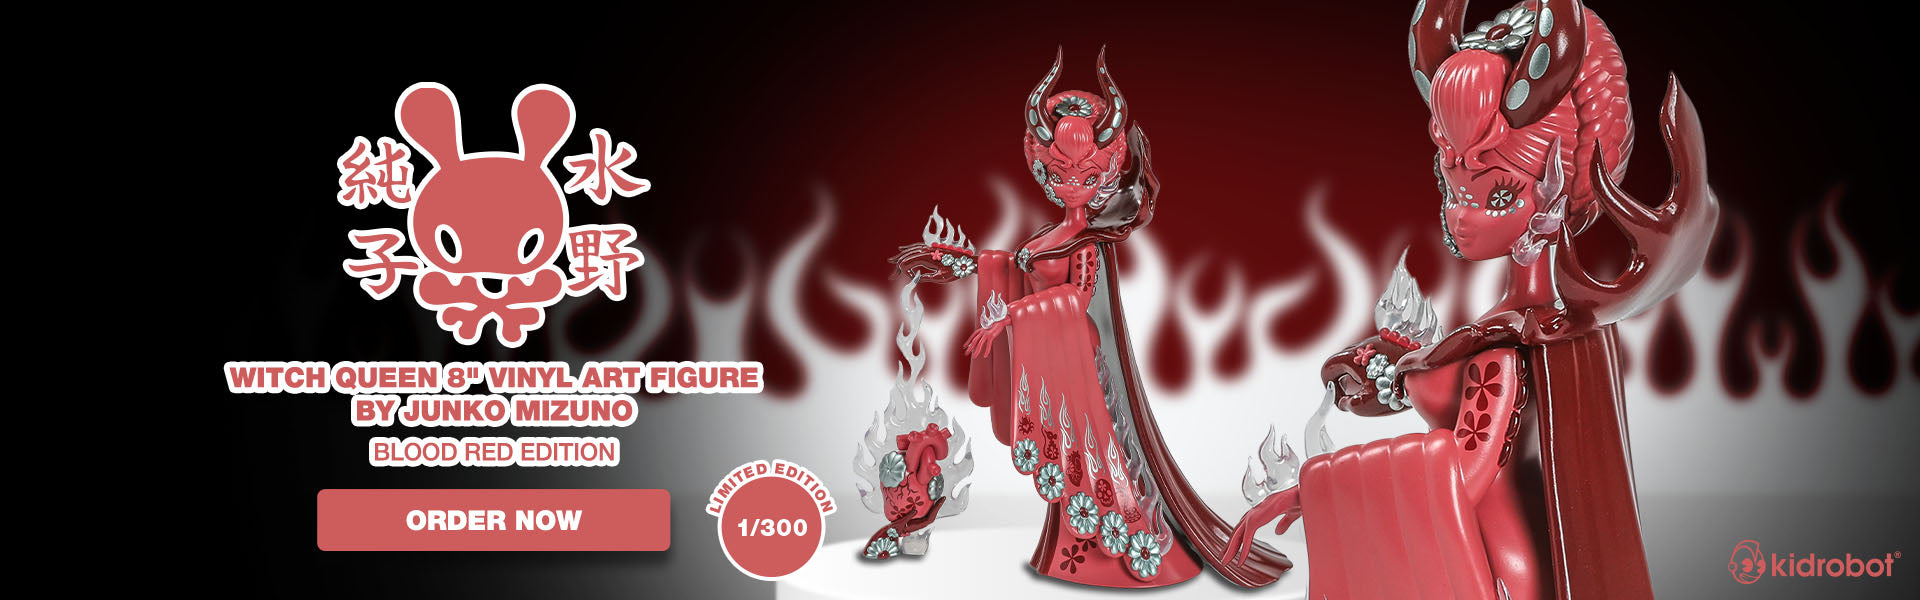 Blood Red Witch Queen Art Figure by Junko Mizuno - Bloody Valentine Edition at Kidrobot.com